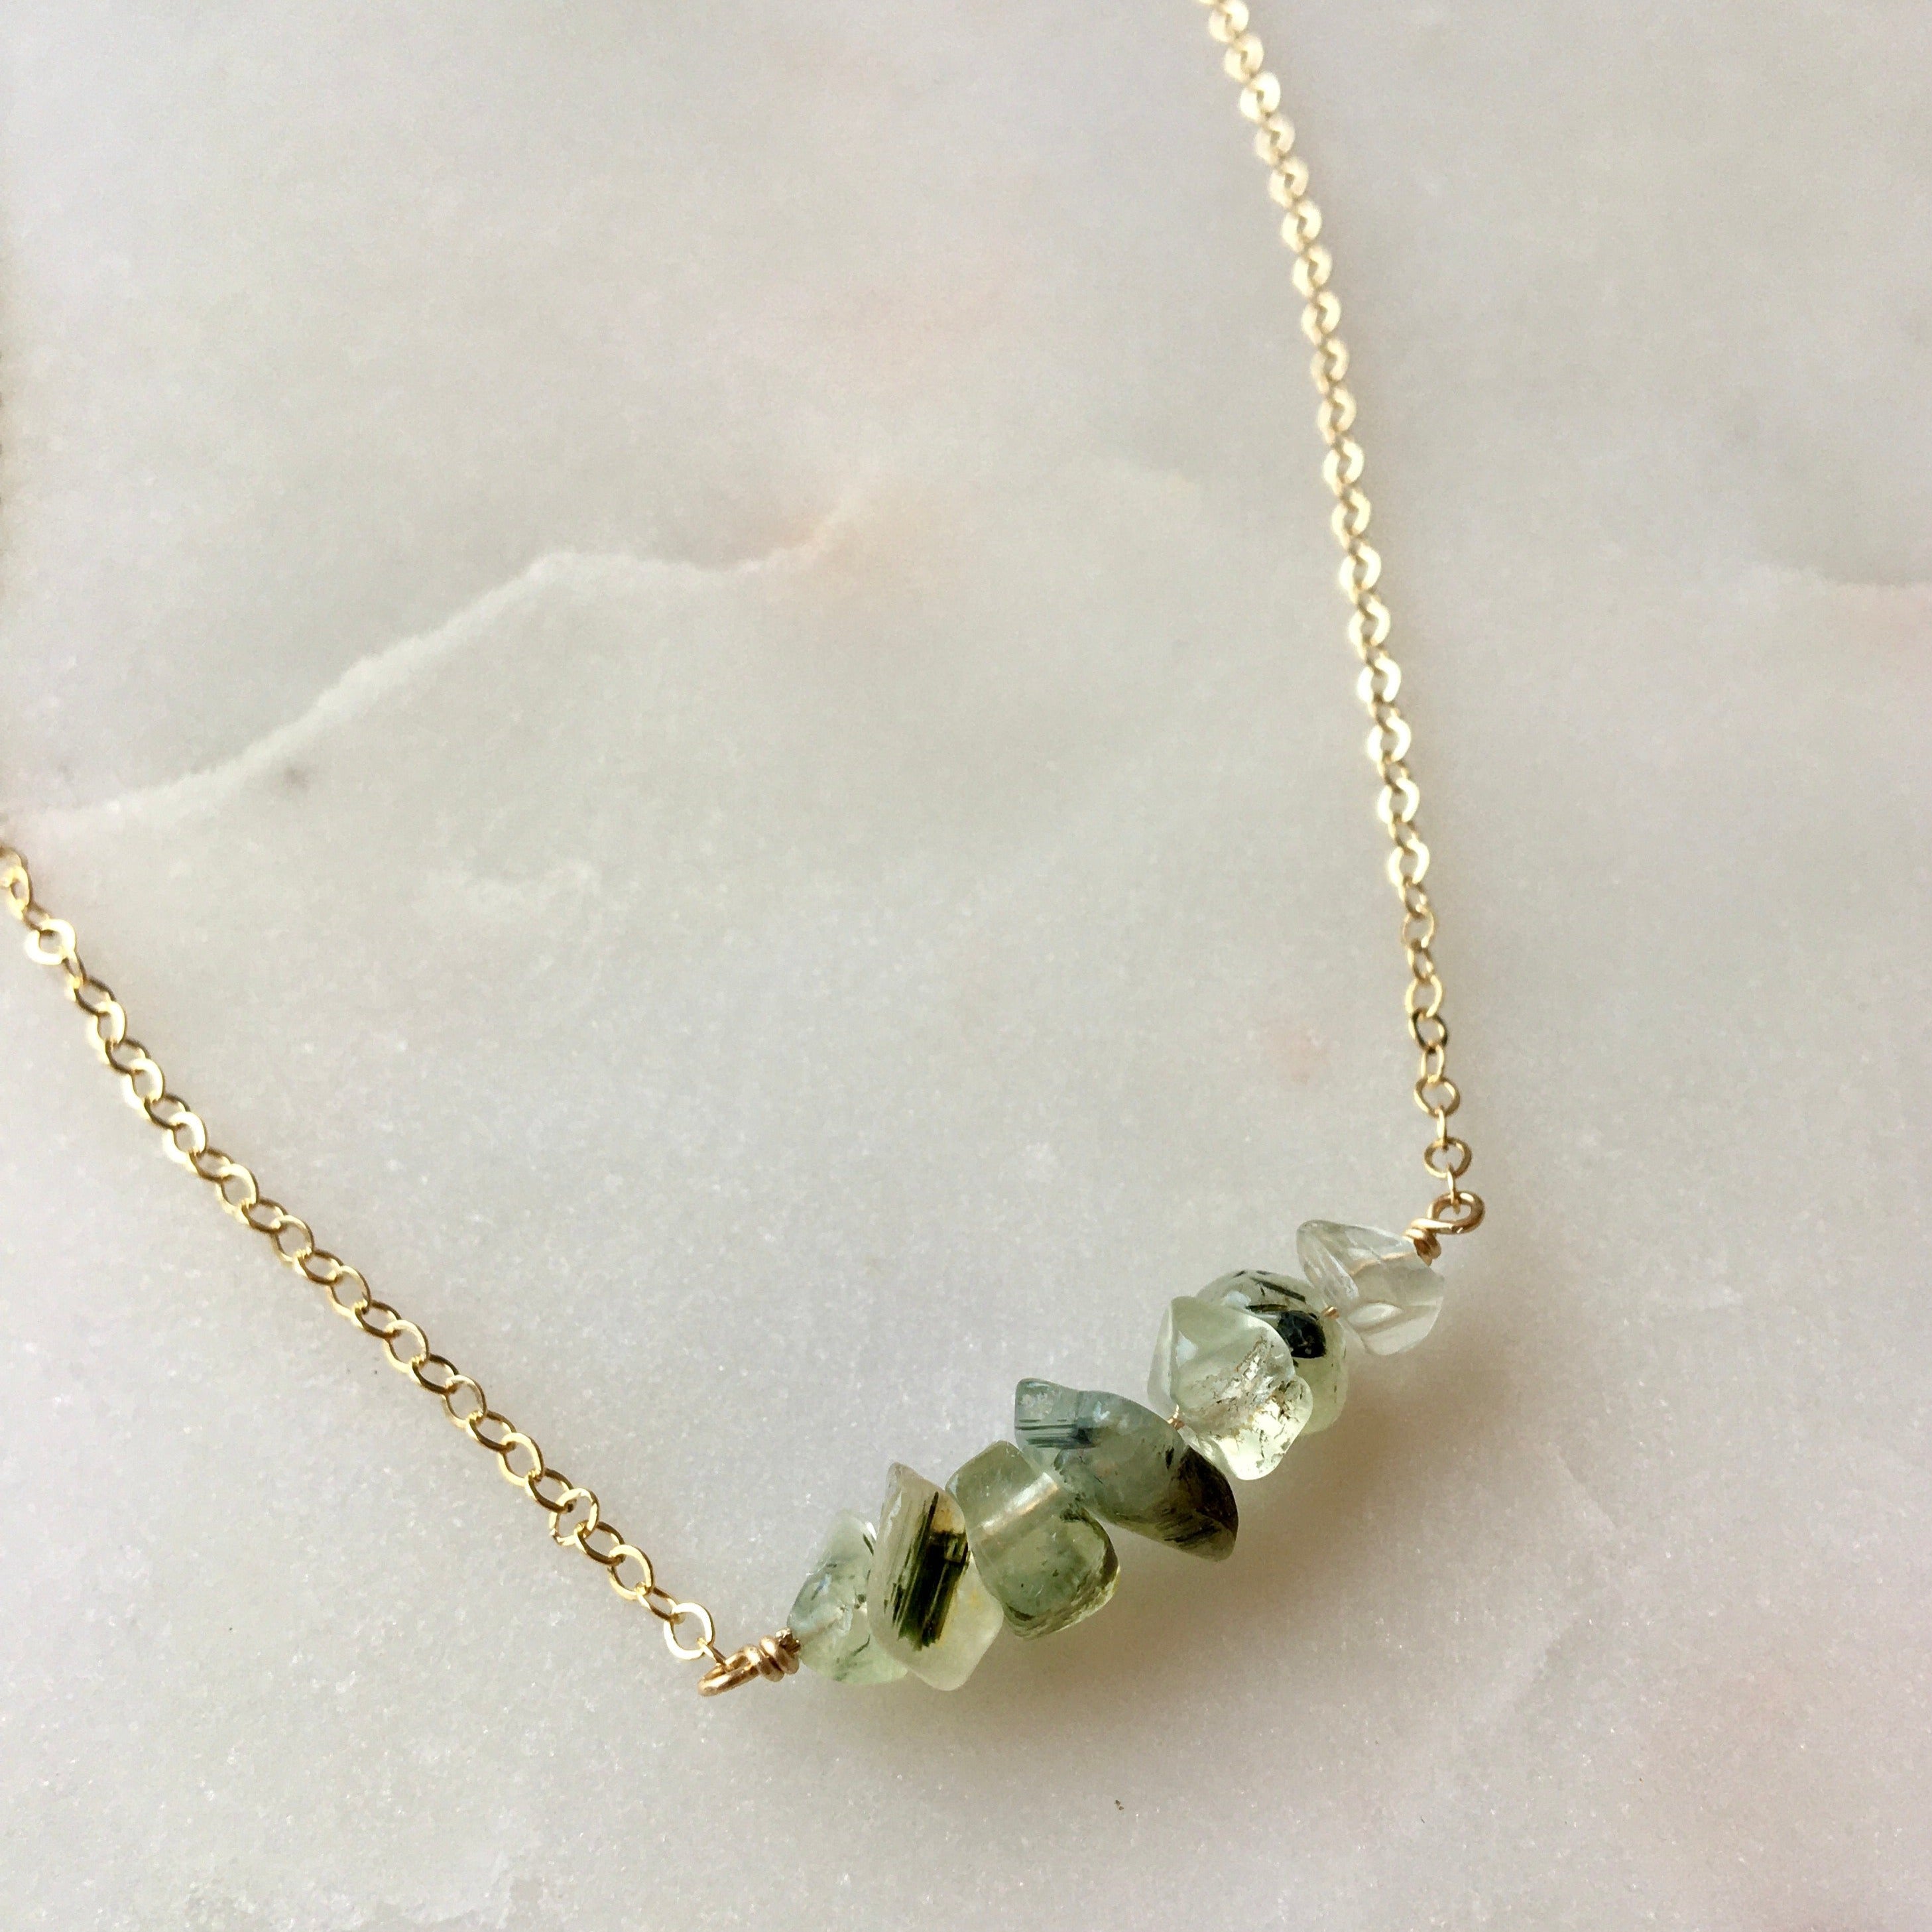 Gemstone Bar Necklace - pick your favorite